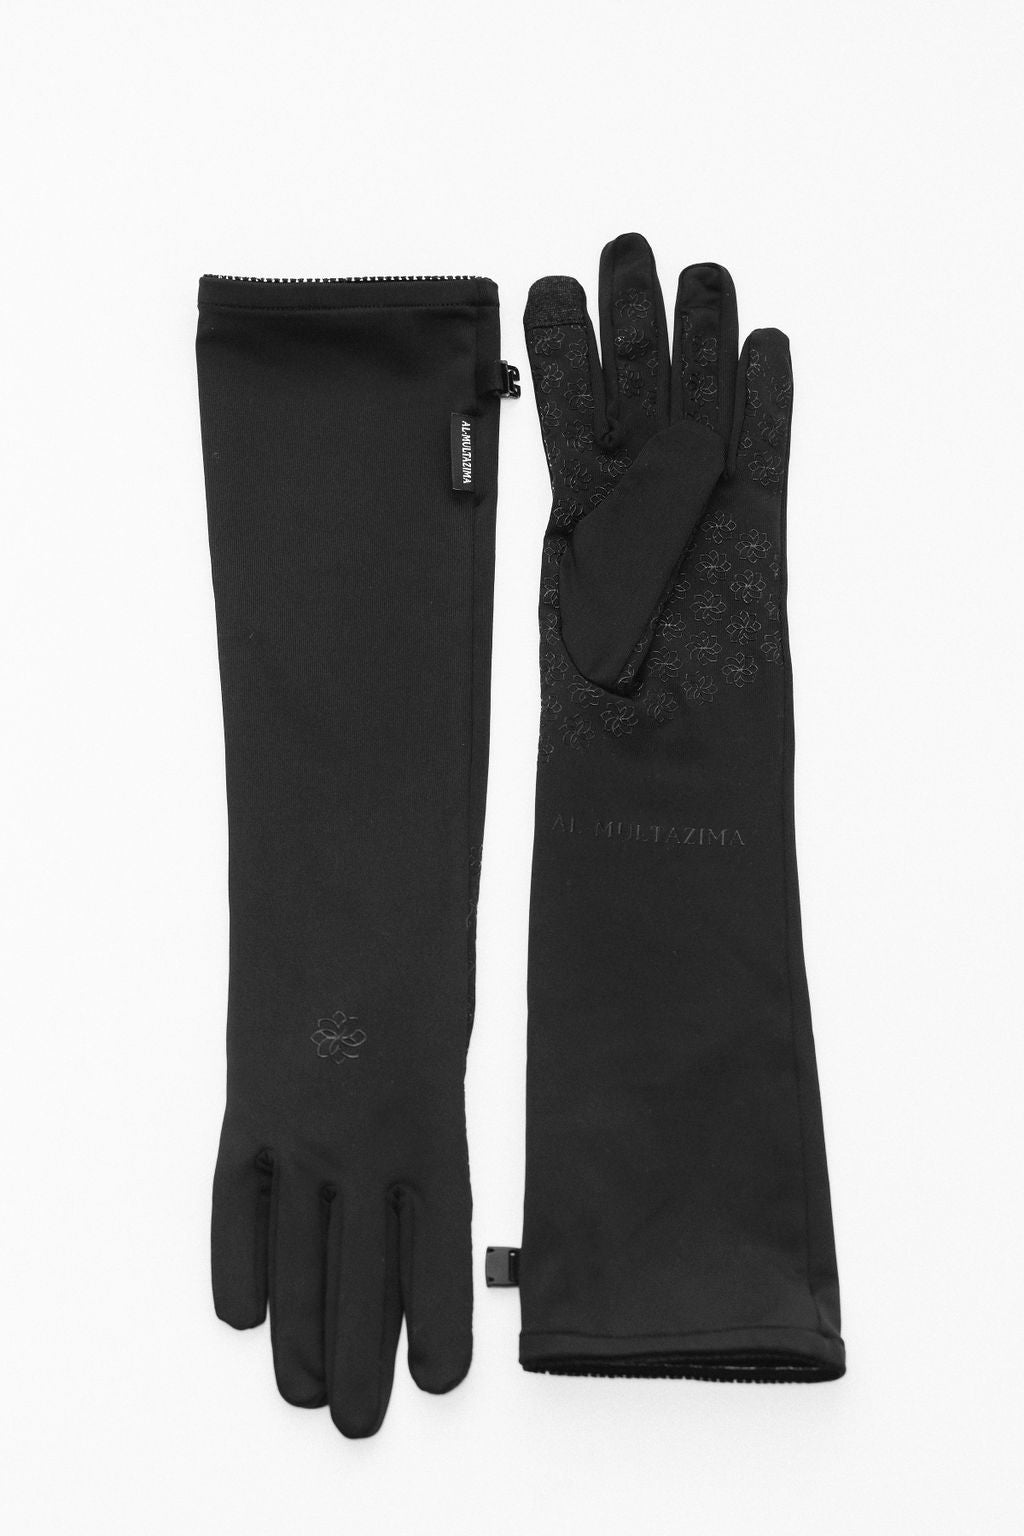 Essential Sunnah Gloves - Long